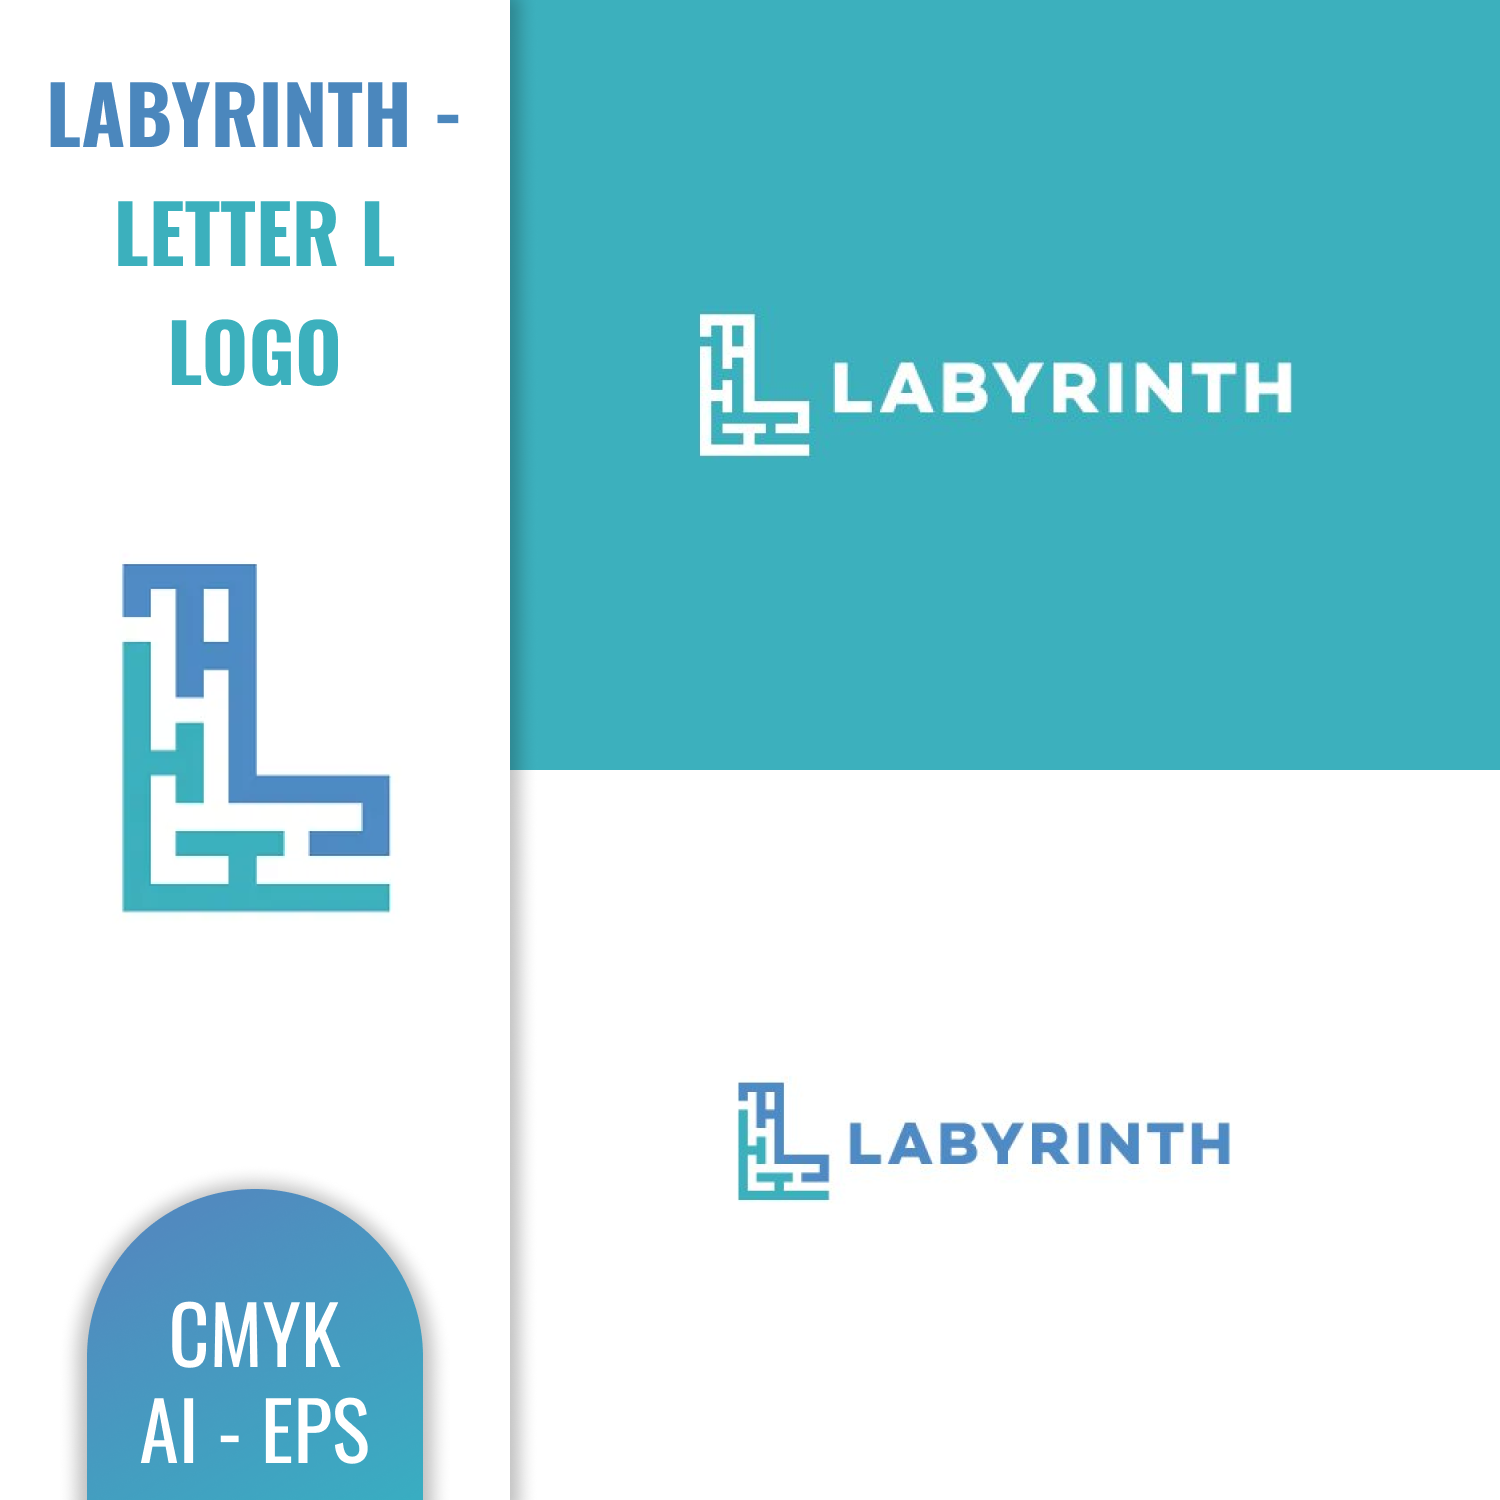 Labyrinth - Letter L Logo.